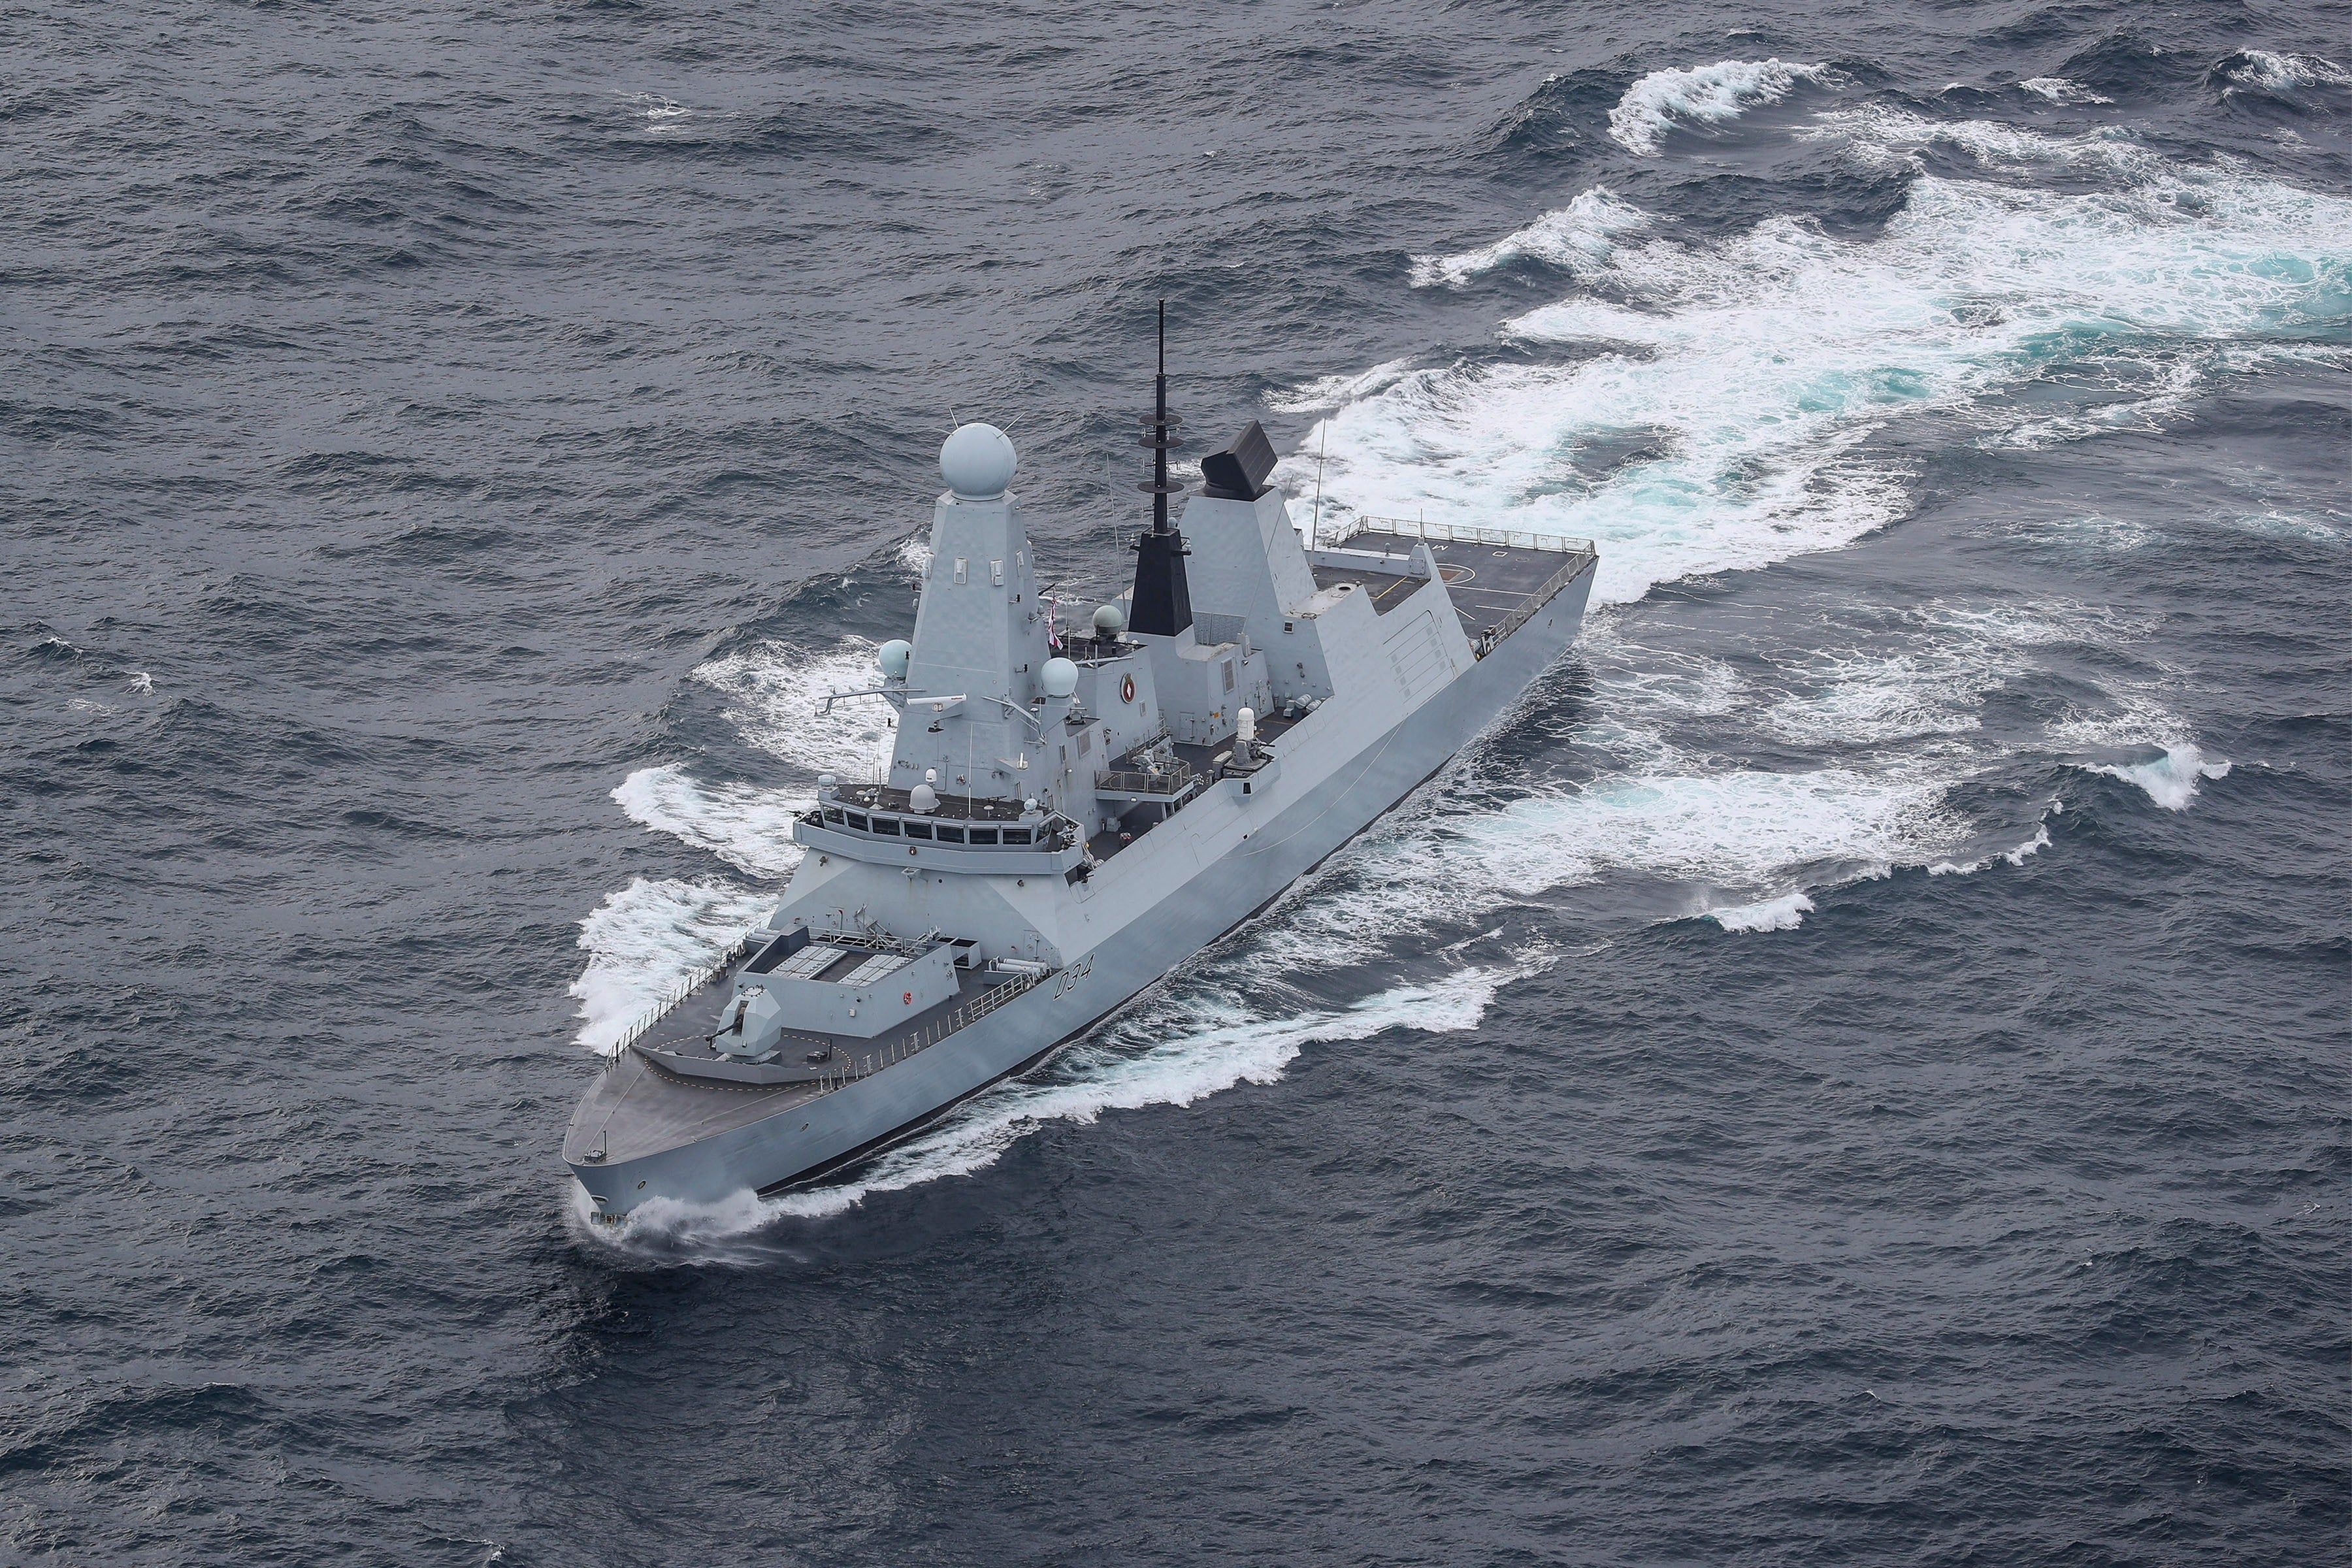 UK warship HMS Diamond, which has intercepted Houthi attacks